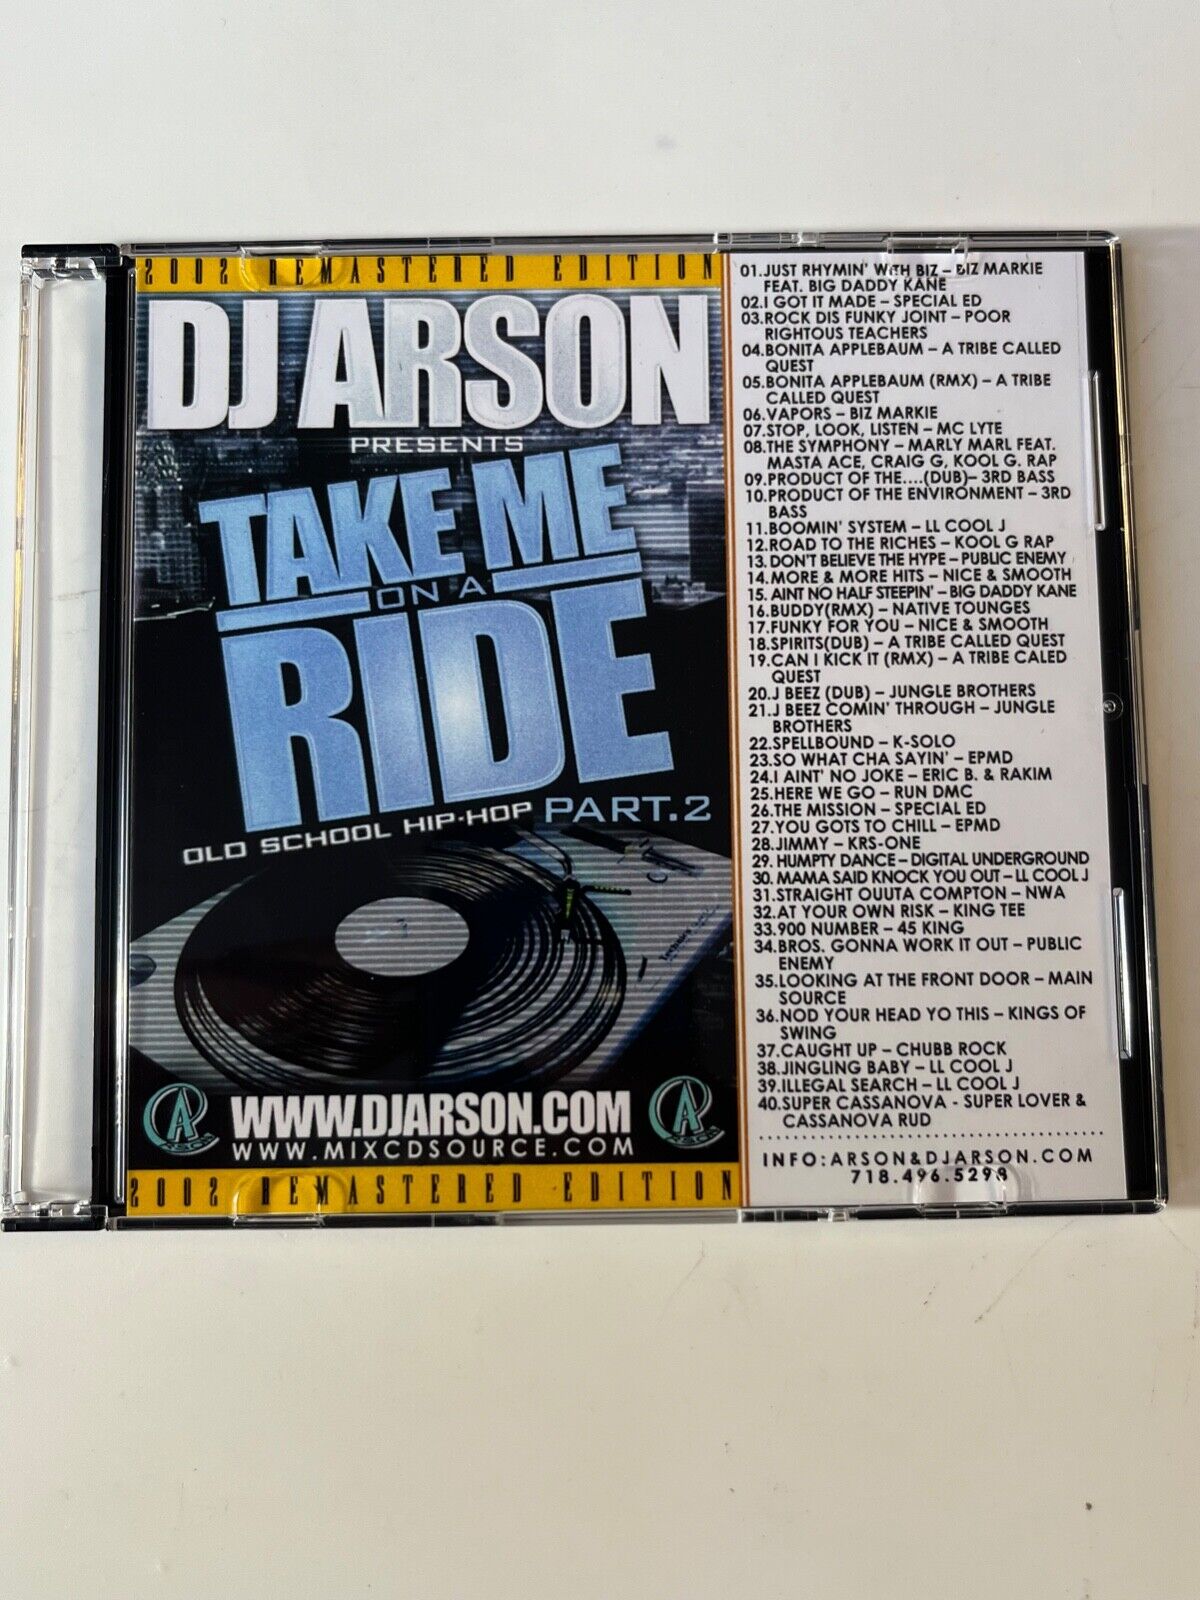 DJ ARSON TAKE ME ON A RIDE PART. 2 OLD SCHOOL HIP HOP NYC PROMO MIXTAPE MIX CD